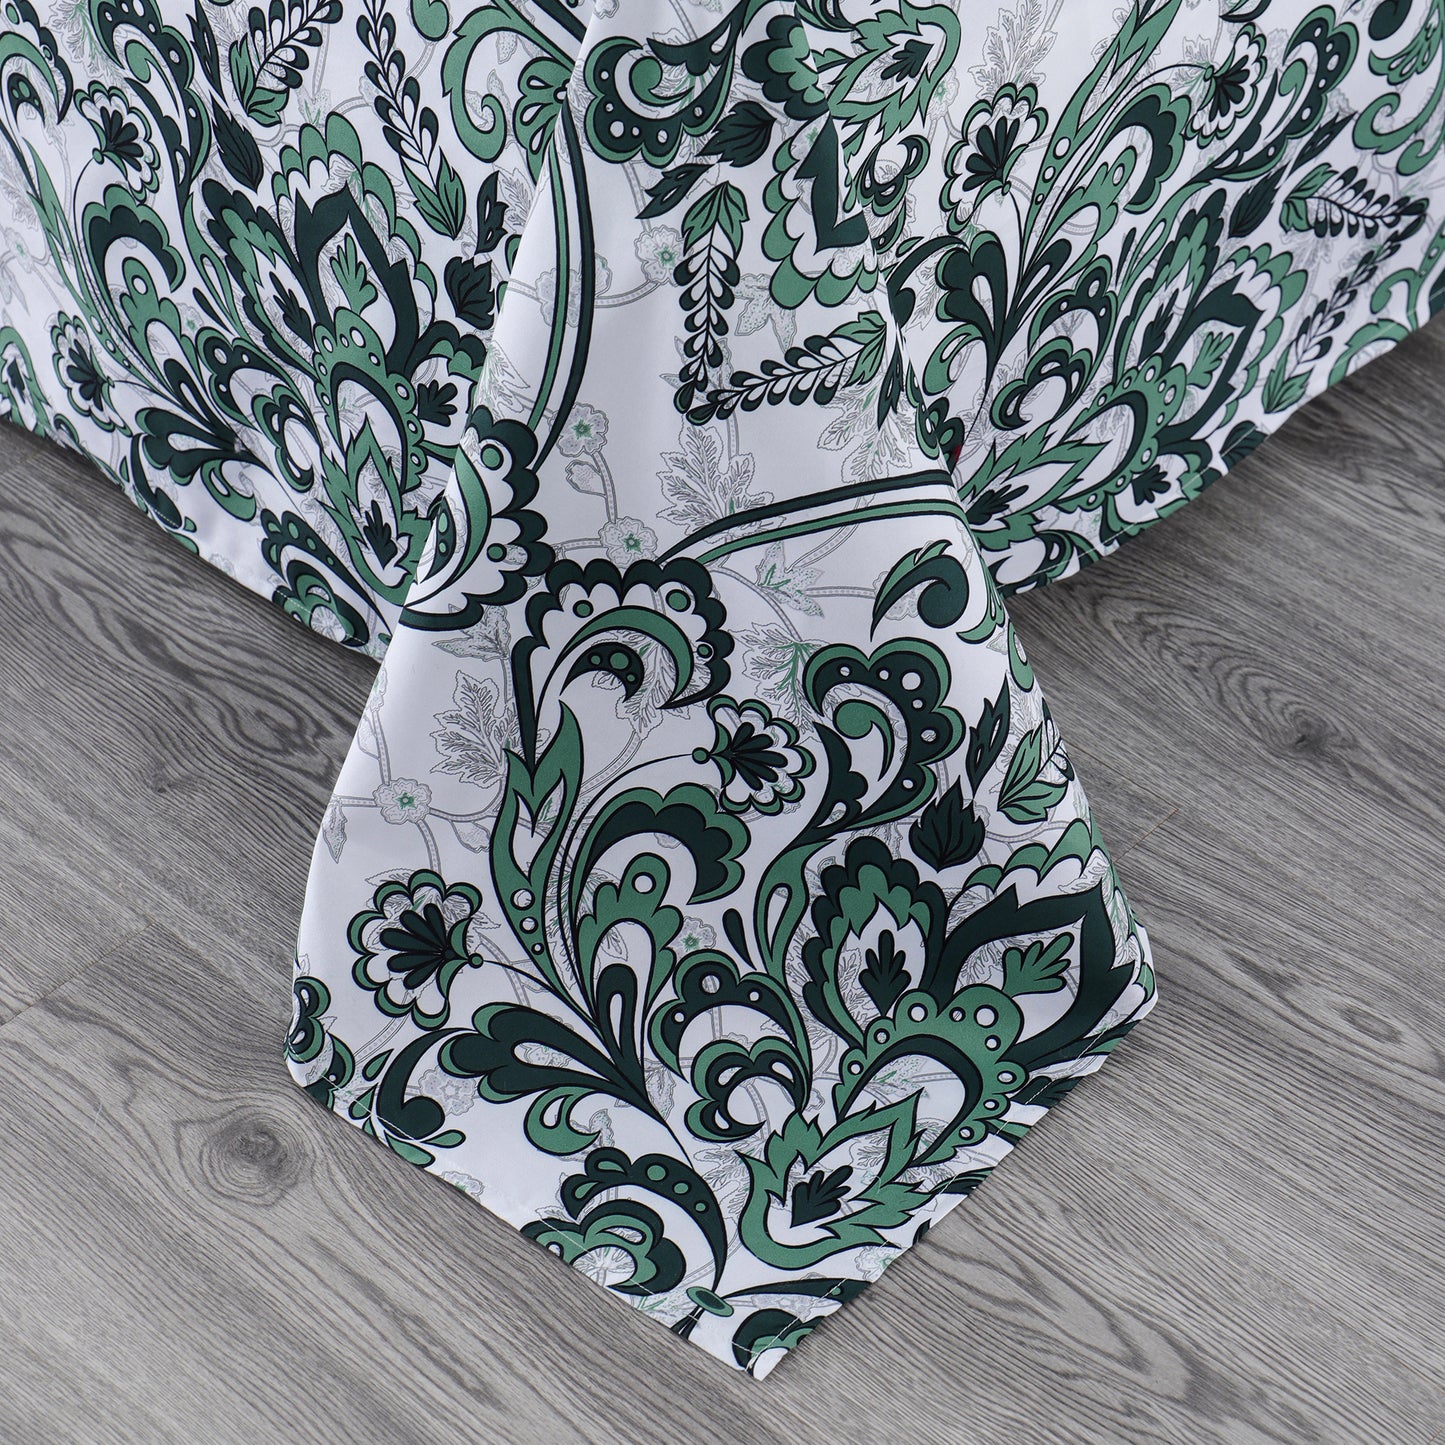 6 Piece Bed Sheet set-green Pattern.